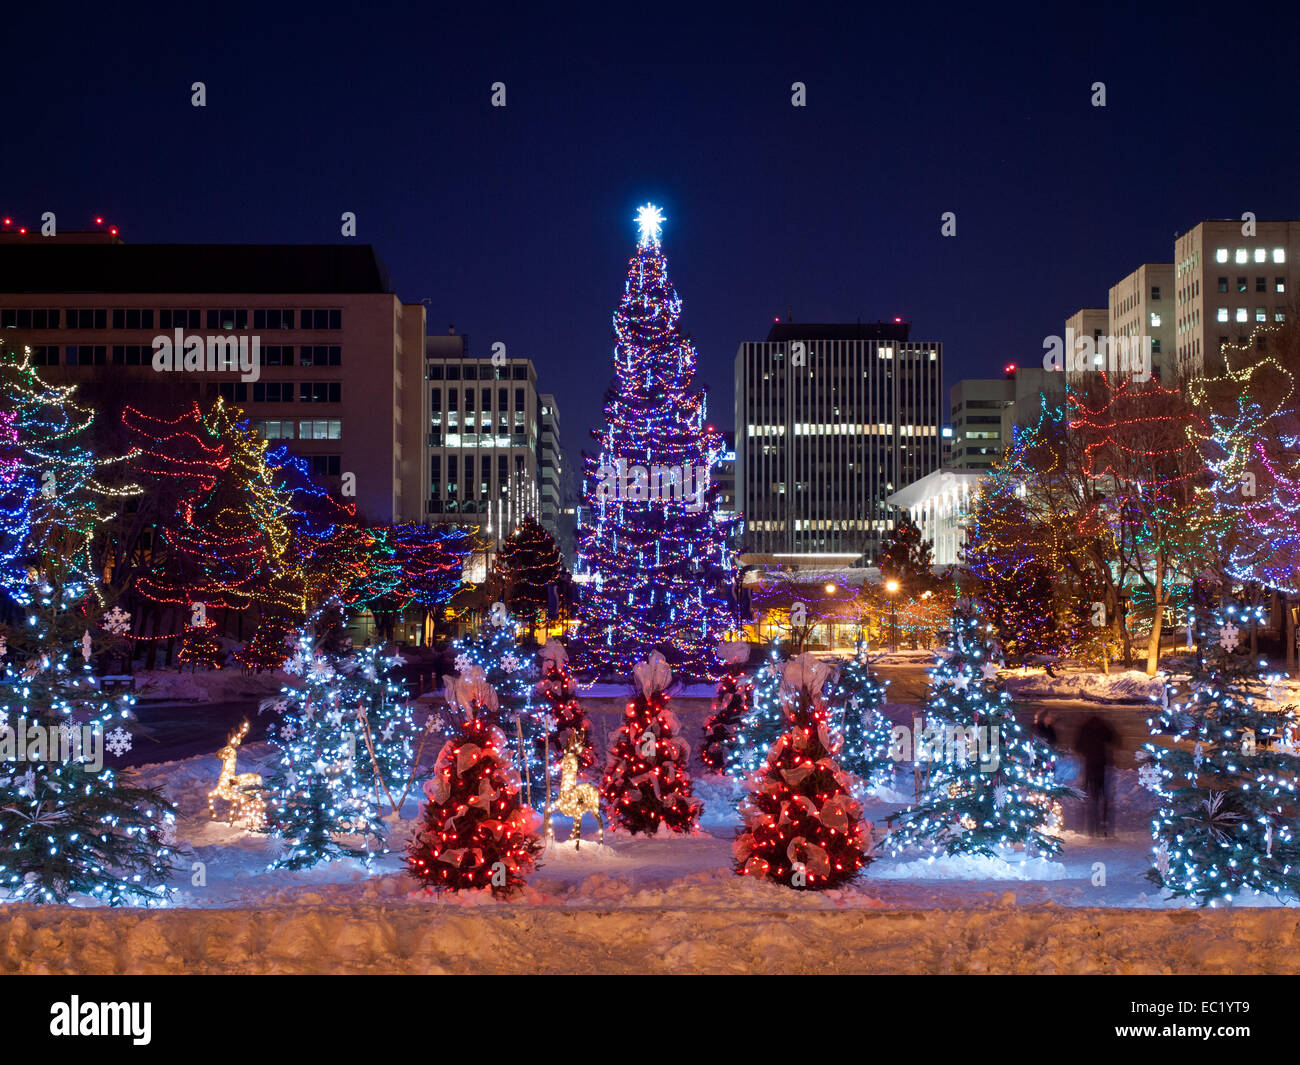 The main Christmas tree and small Christmas trees at the Alberta Legislature Grounds in Edmonton, Alberta, Canada. Stock Photo